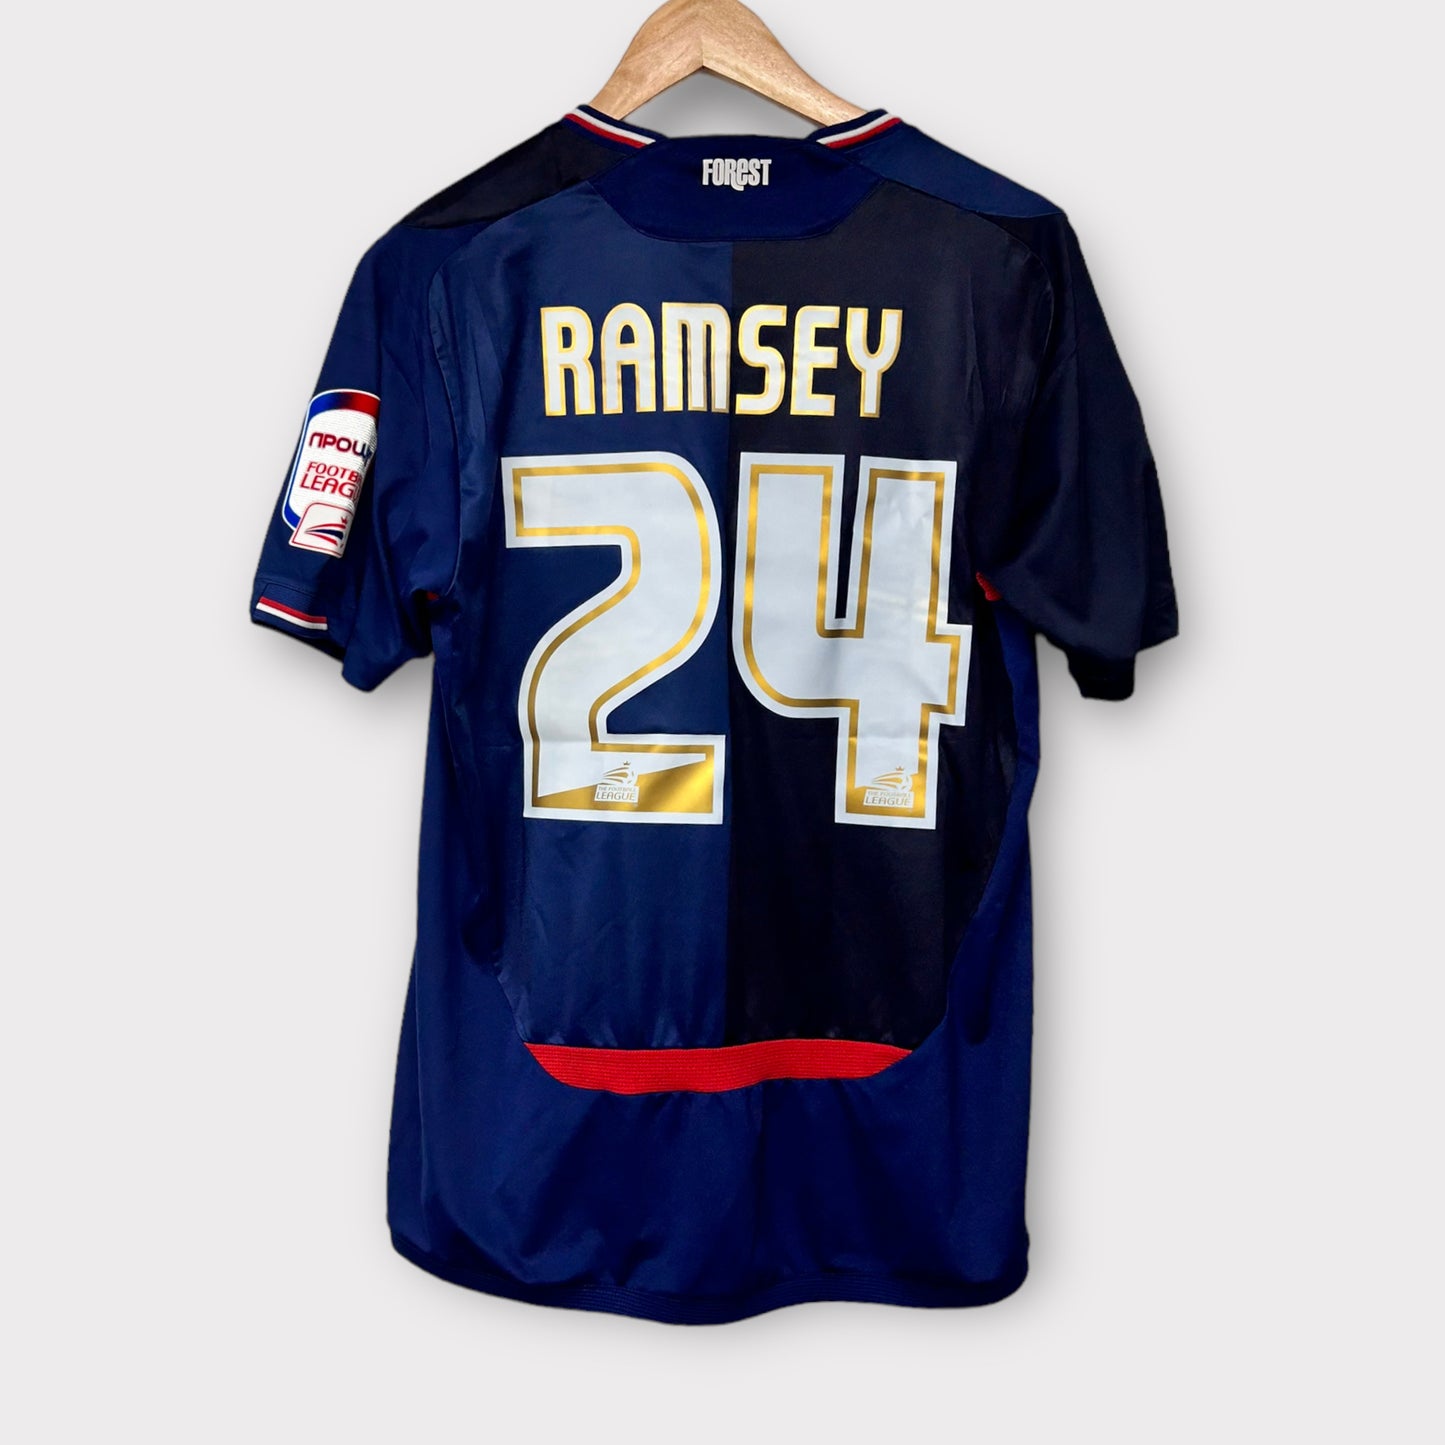 Nottingham Forest 2010/11 3rd Shirt - Ramsey 24 (S)